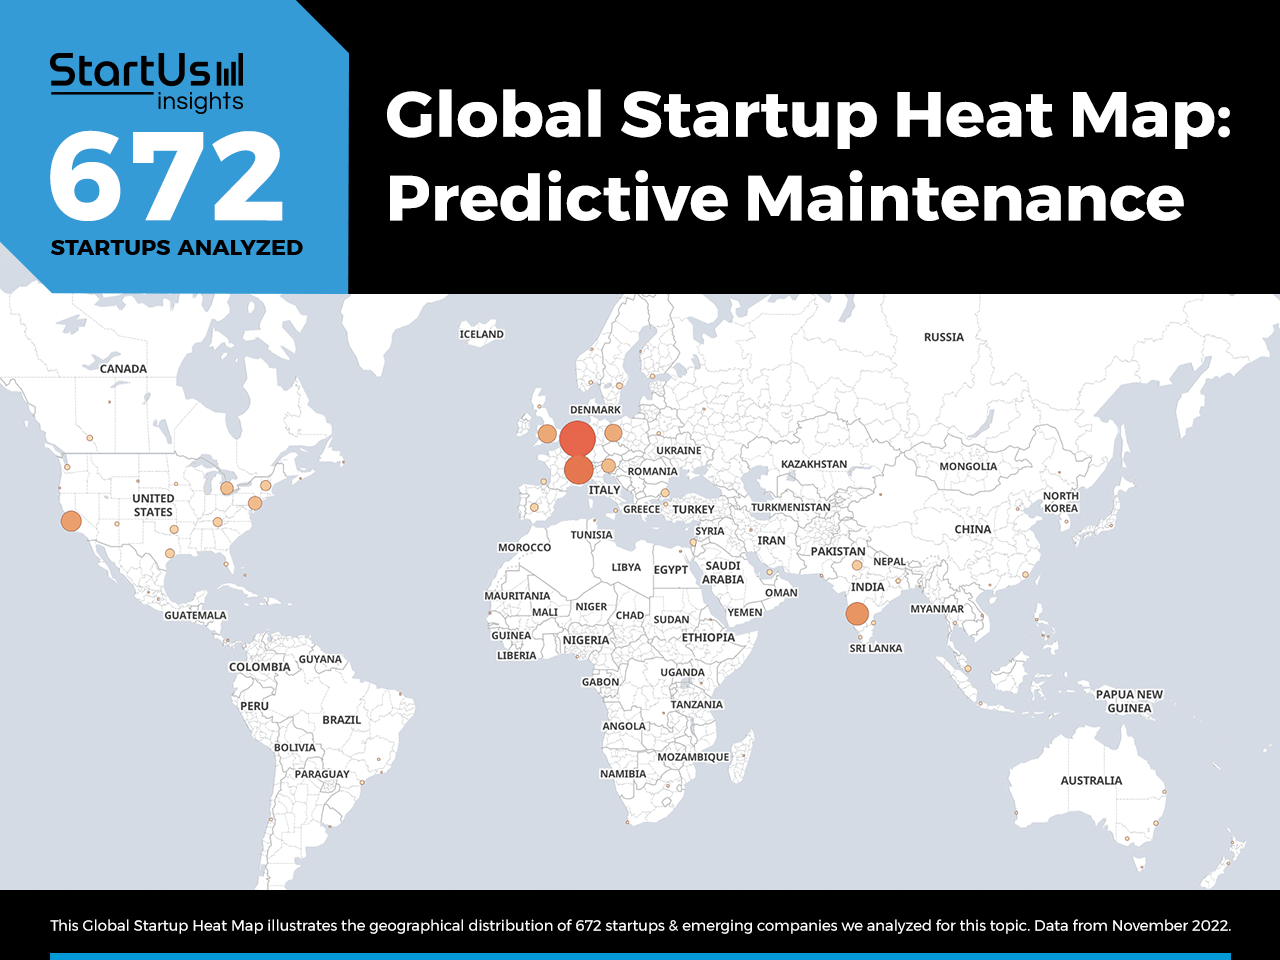 Predictive-Maintenance-startups-Heat-Map-StartUs-Insights-noresize